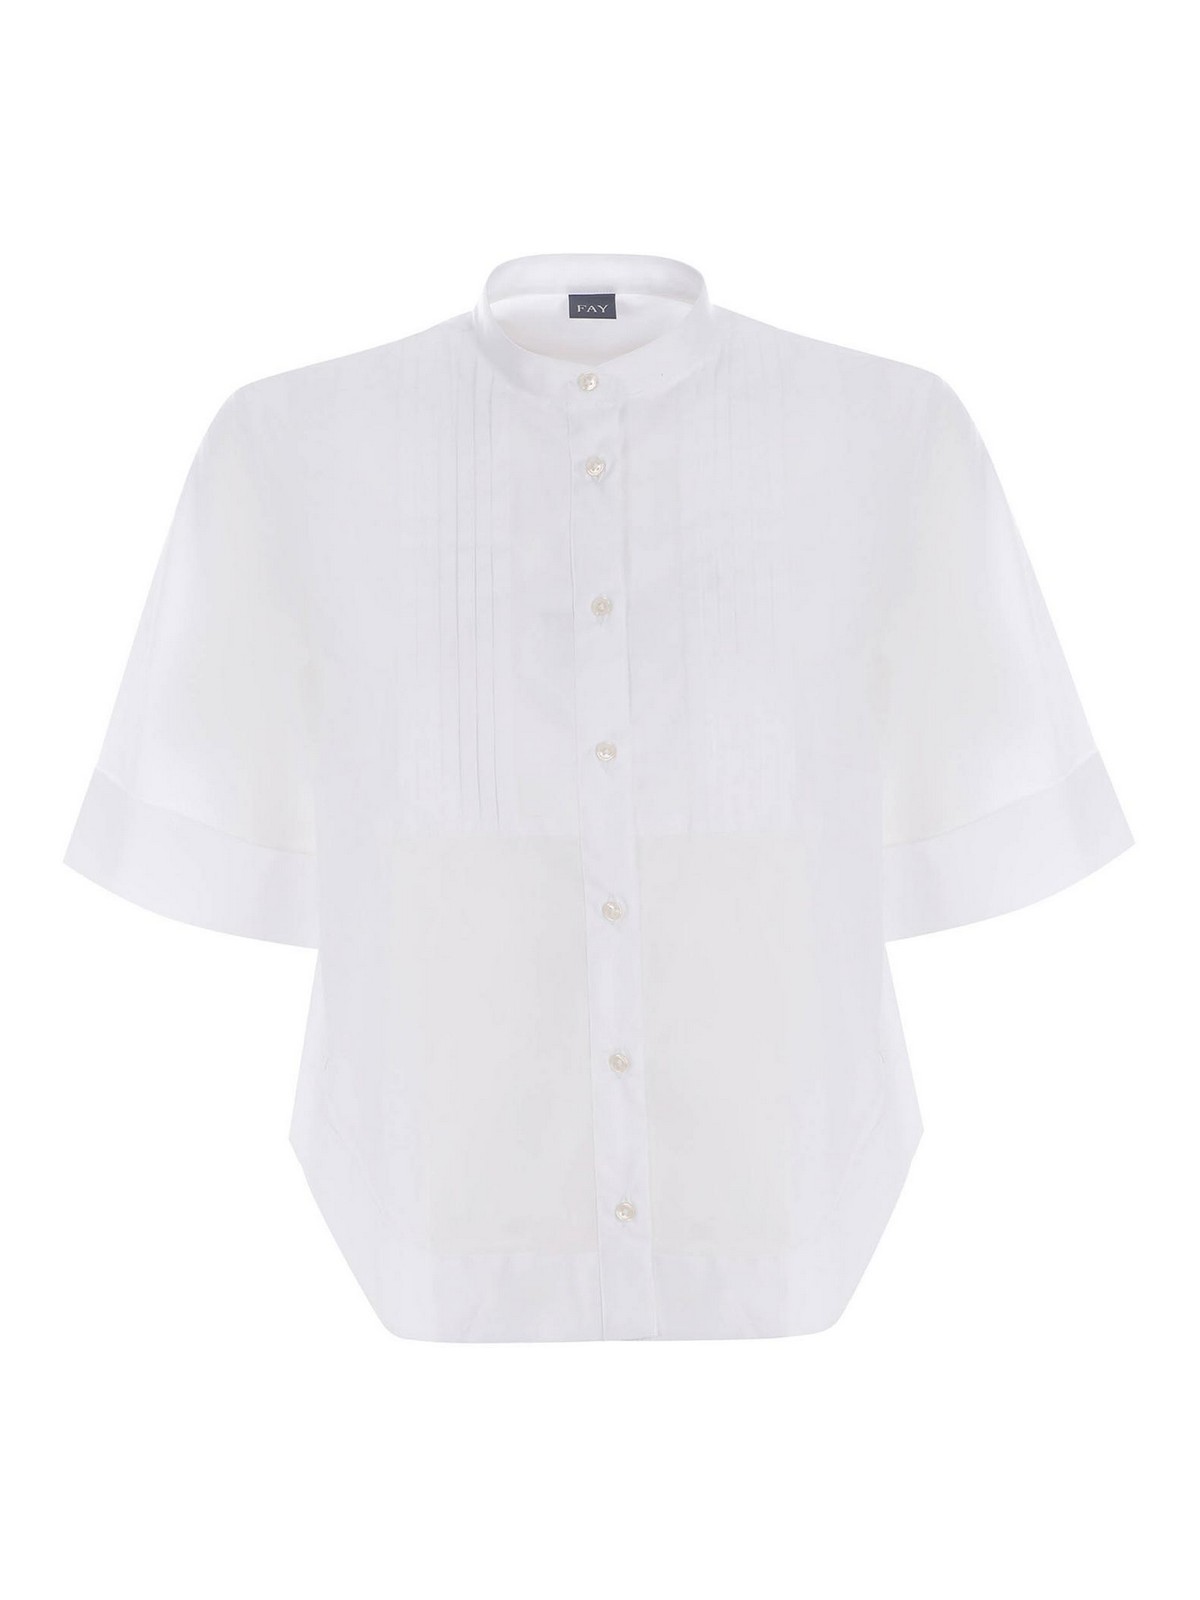 Fay Poplin Shirt In White